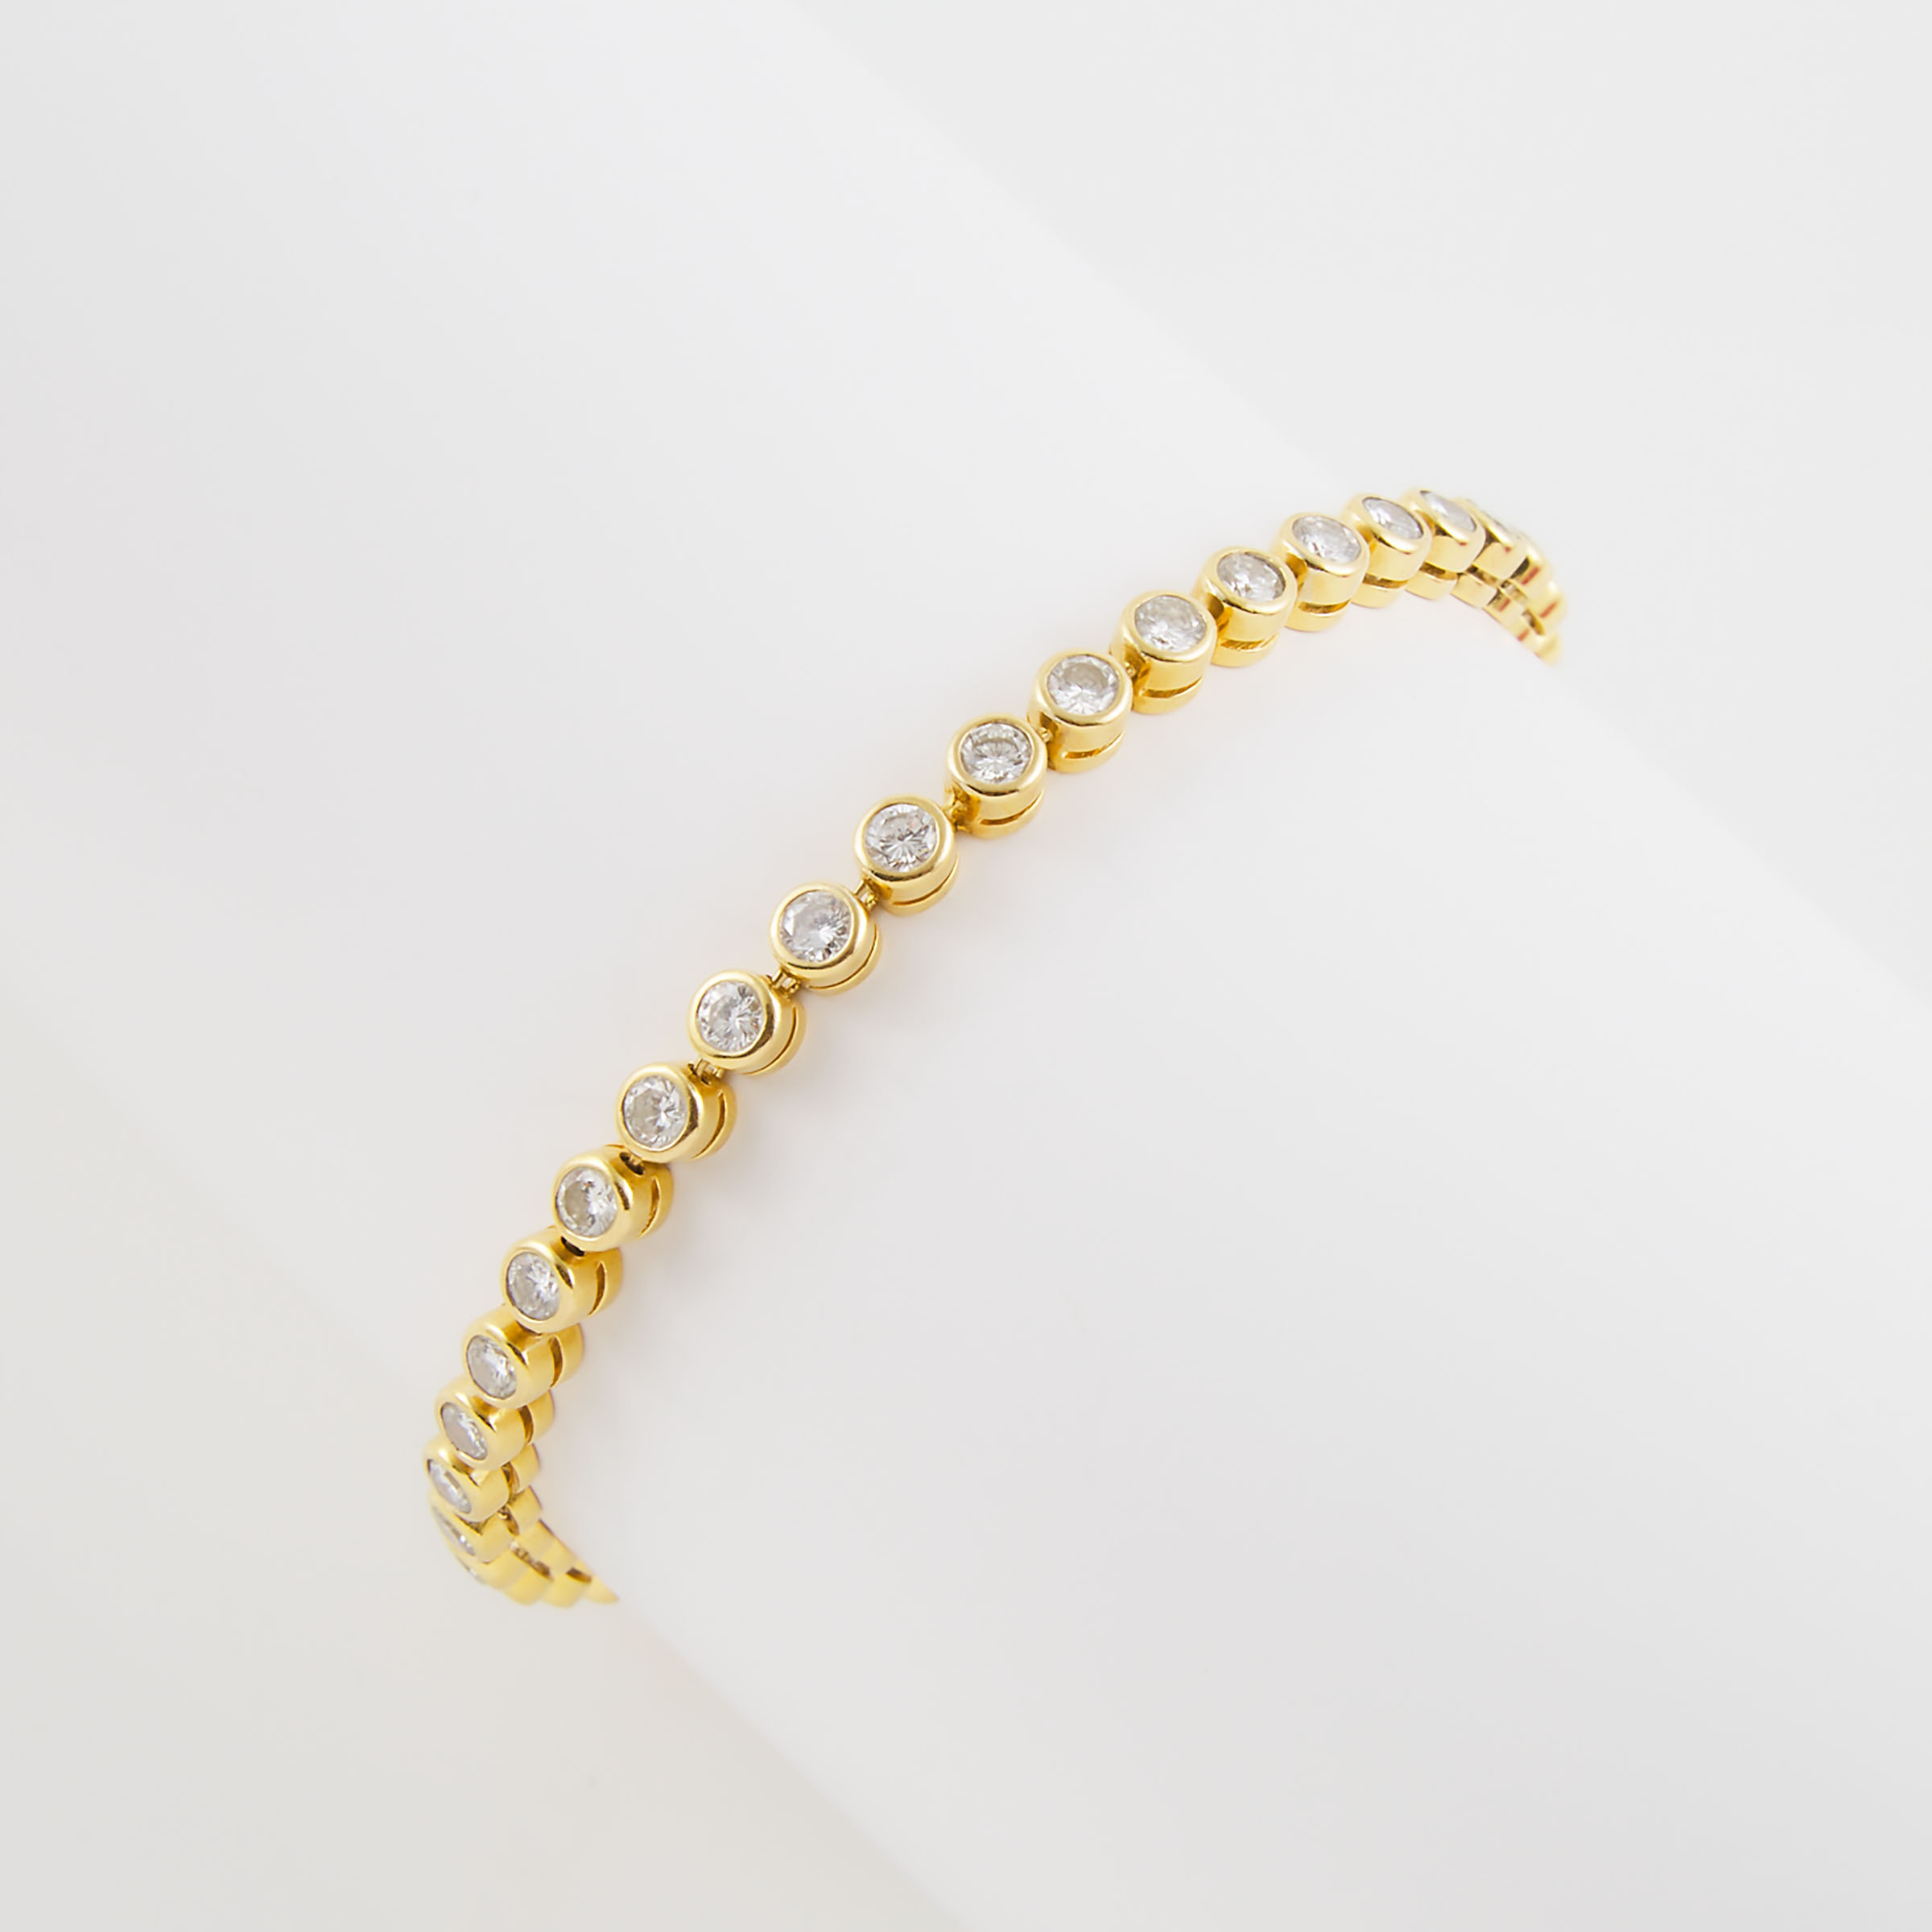 Ming's 18k Yellow Gold Bracelet